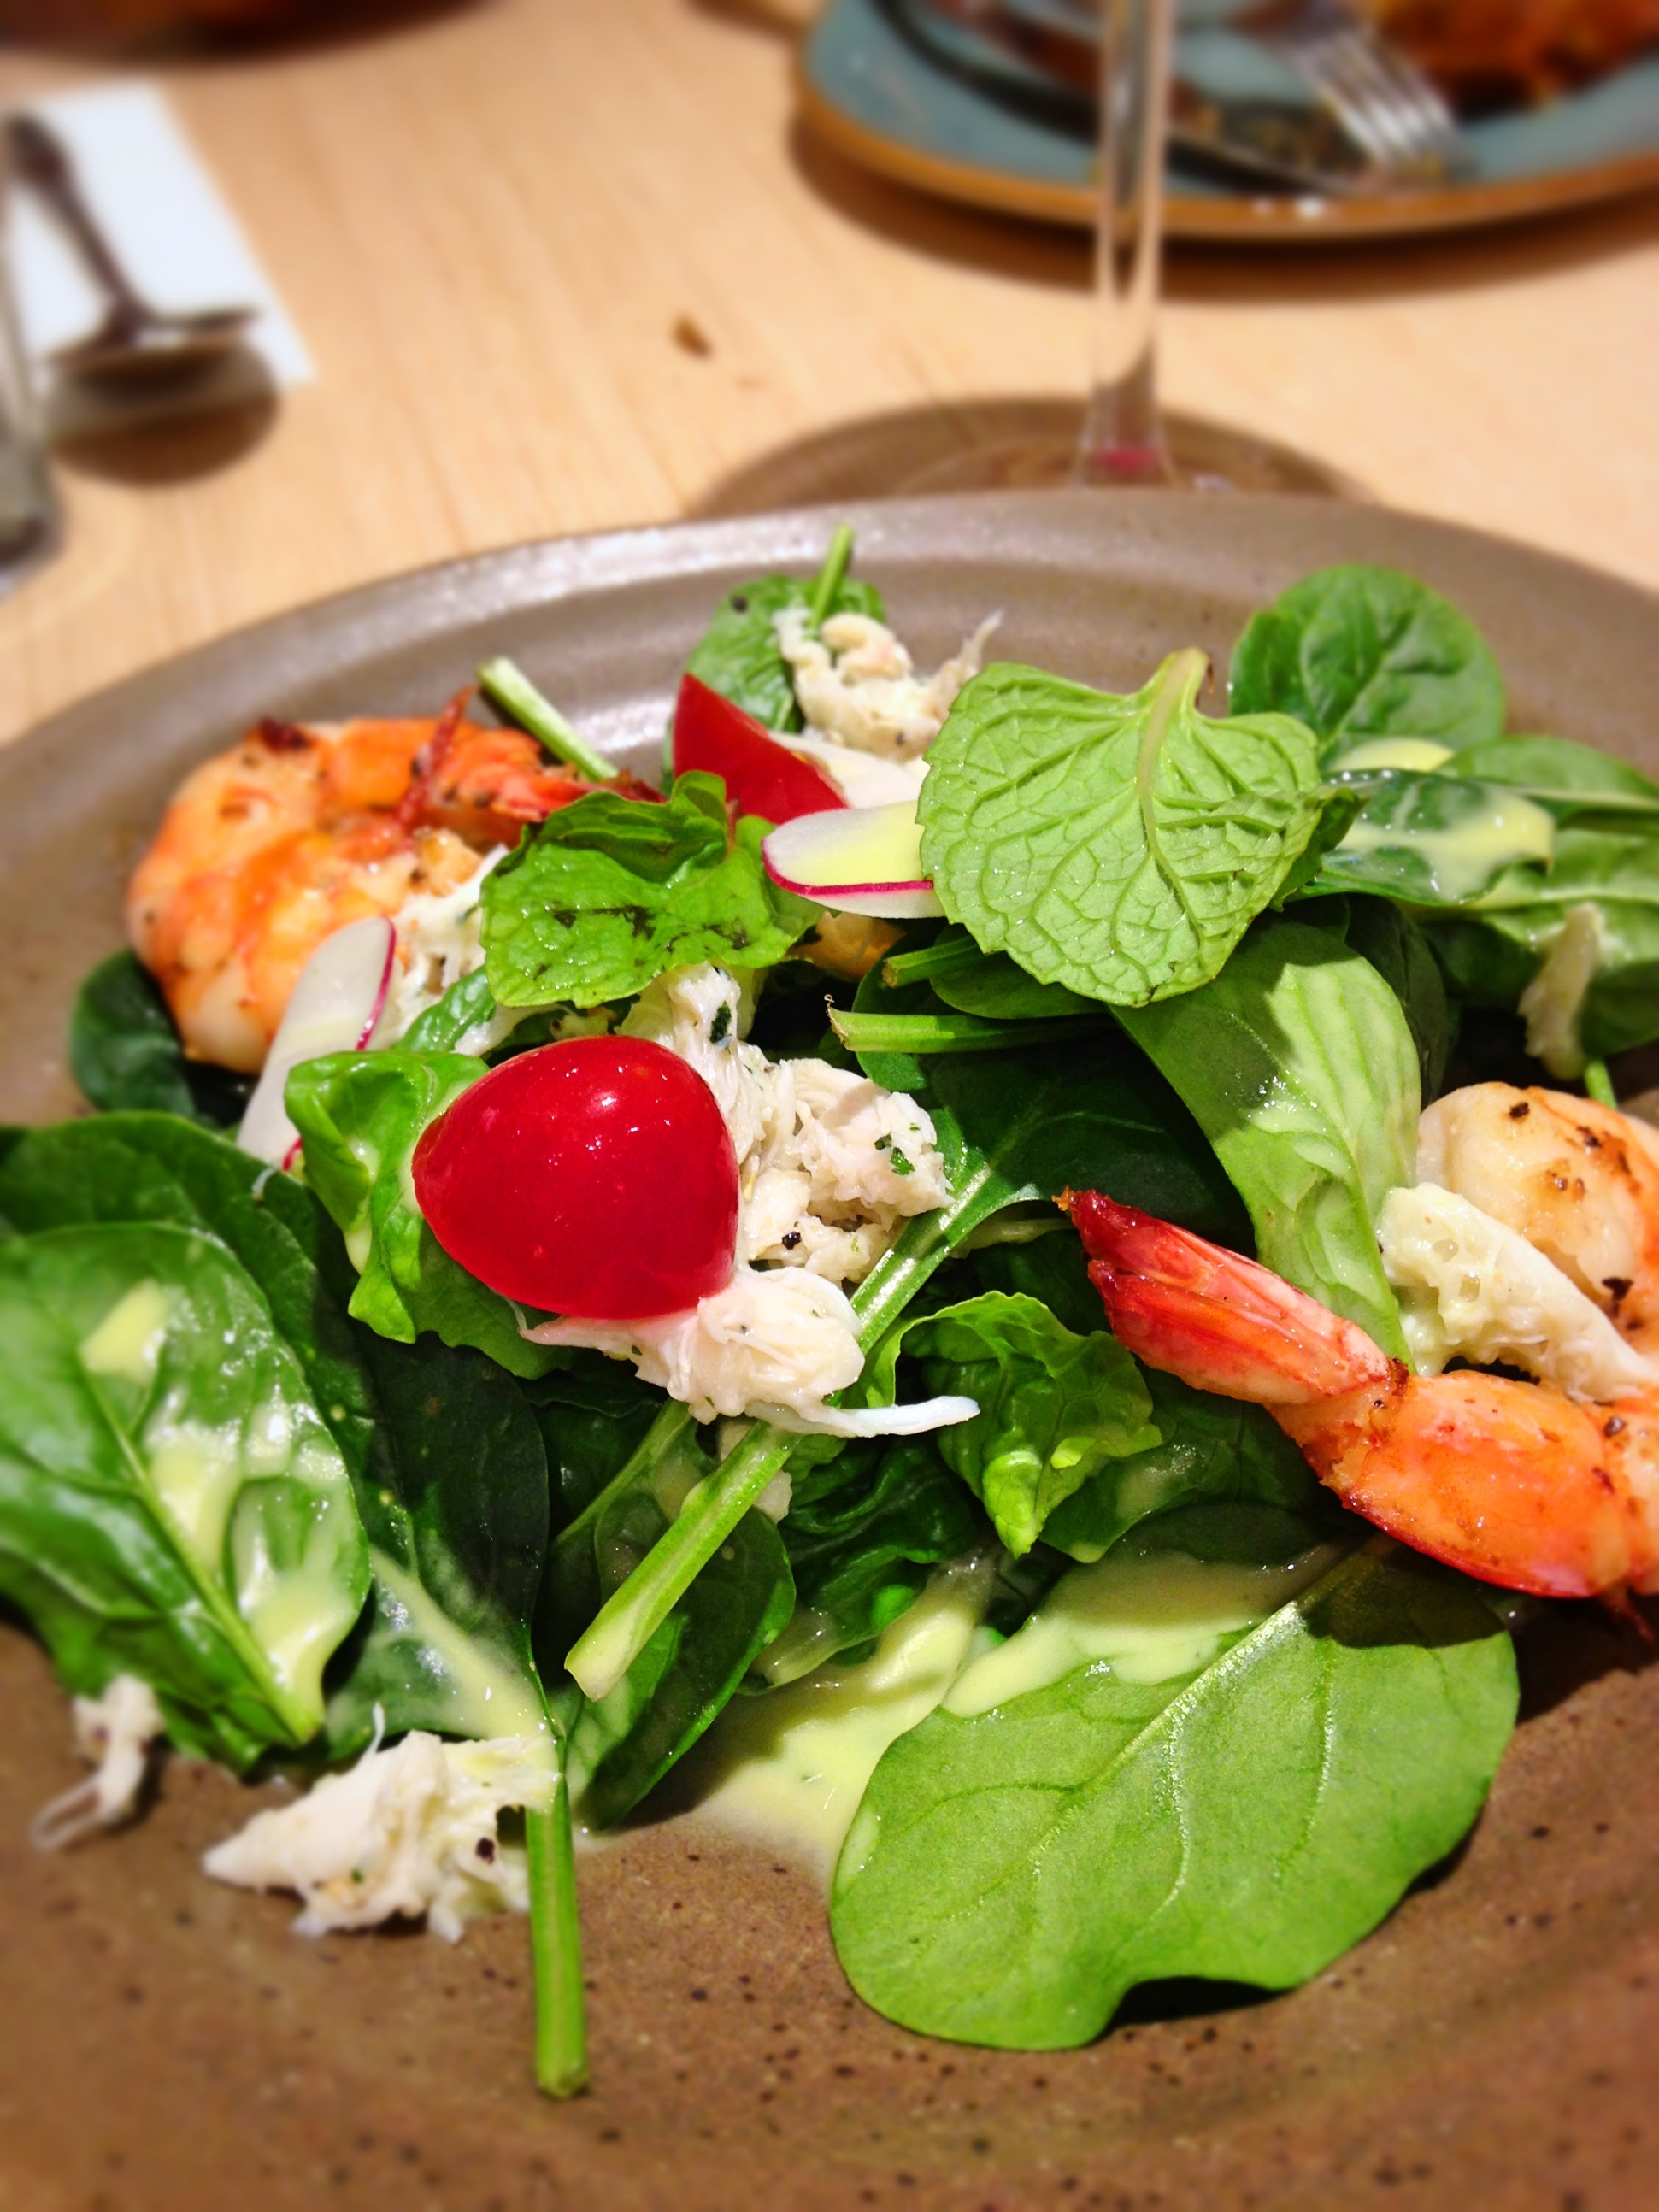 PODI prawn and crab spinach salad